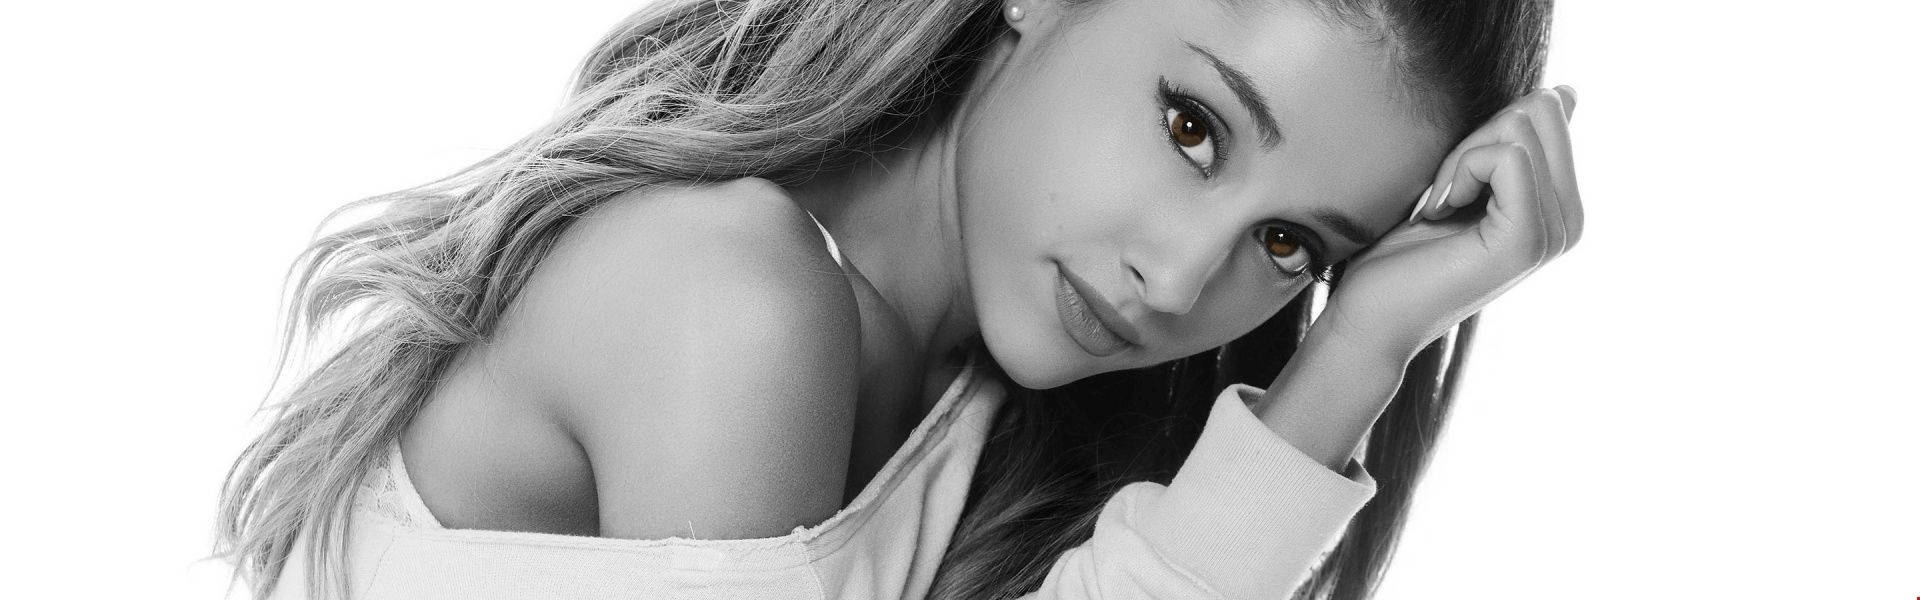 Dual Screen Ariana Grande Black And White Background